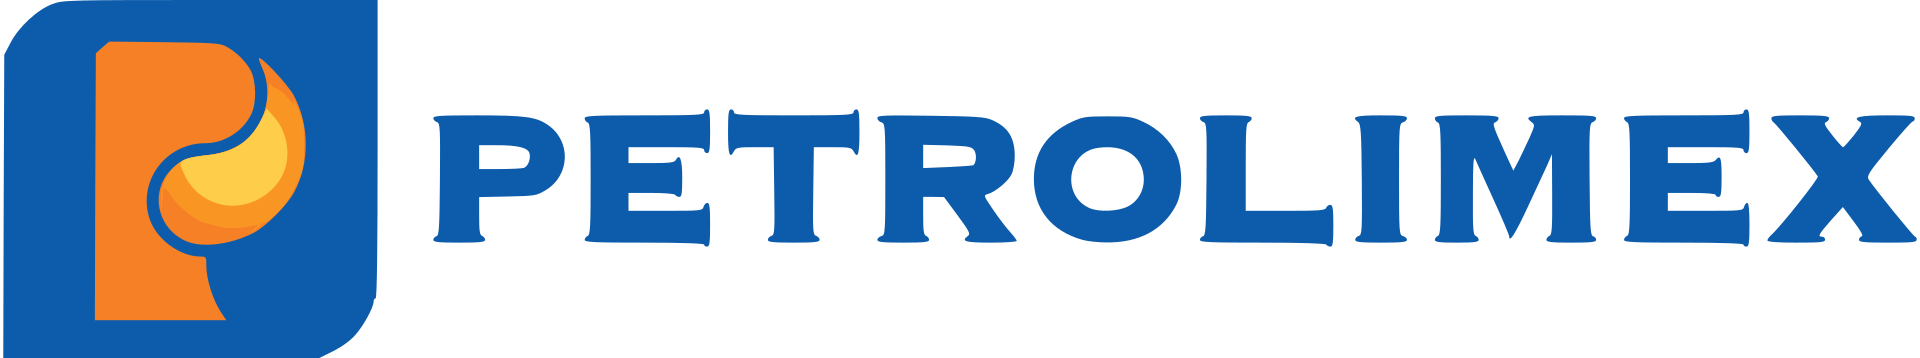 Petrolimex Brand Logo